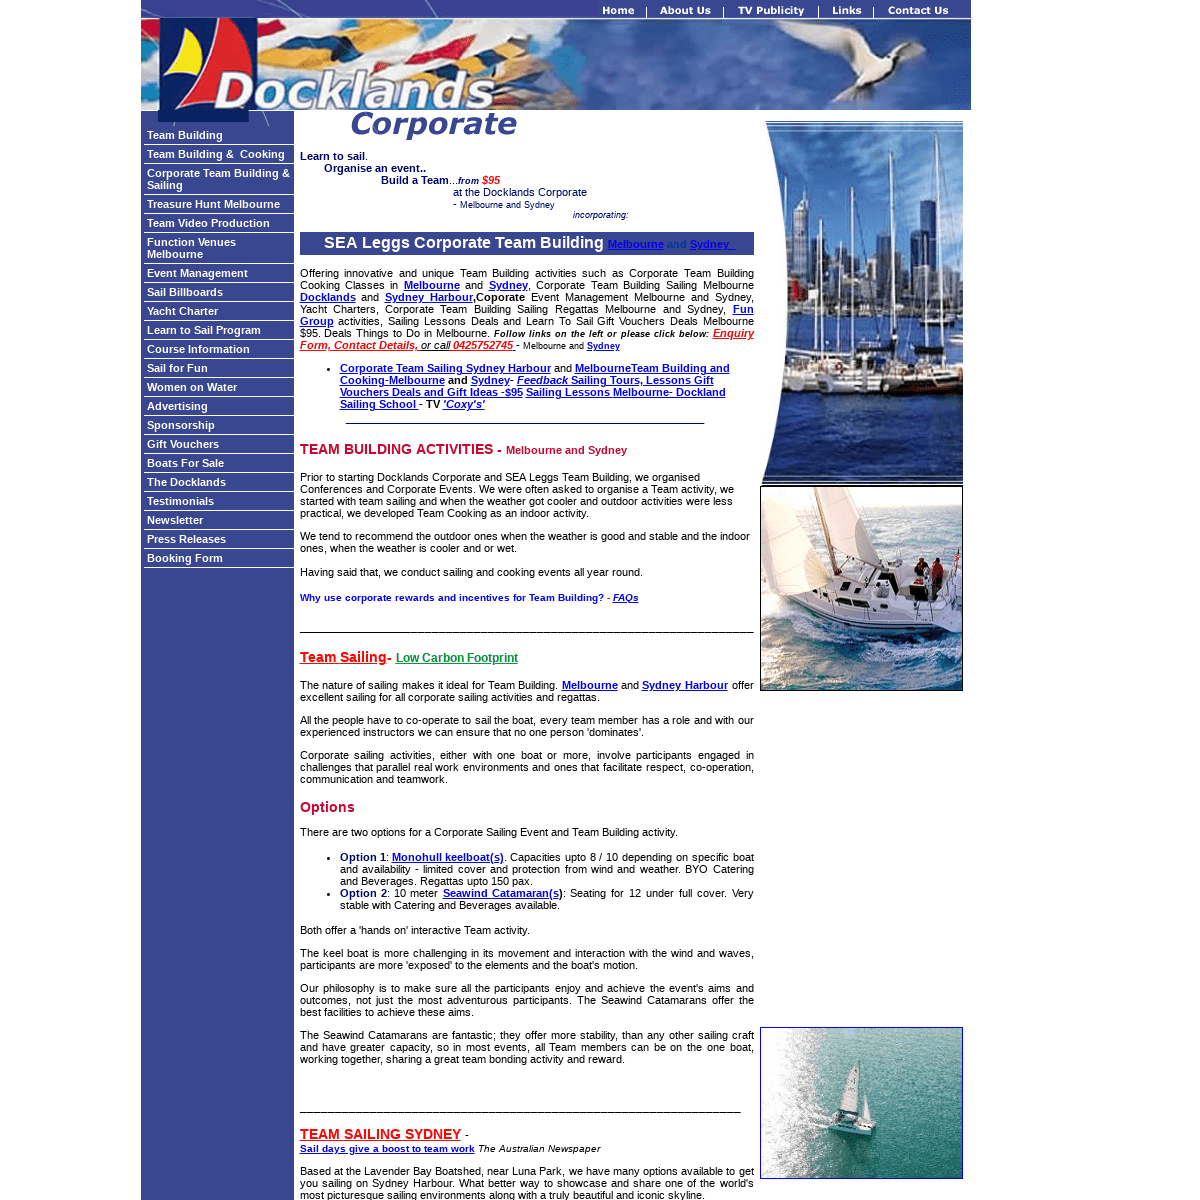 Corporate Team Building Activities Sailing Regattas, Sailing Deals Lessons $95 Melbourne Gift Vouchers $95, Learn to Sail $95.00